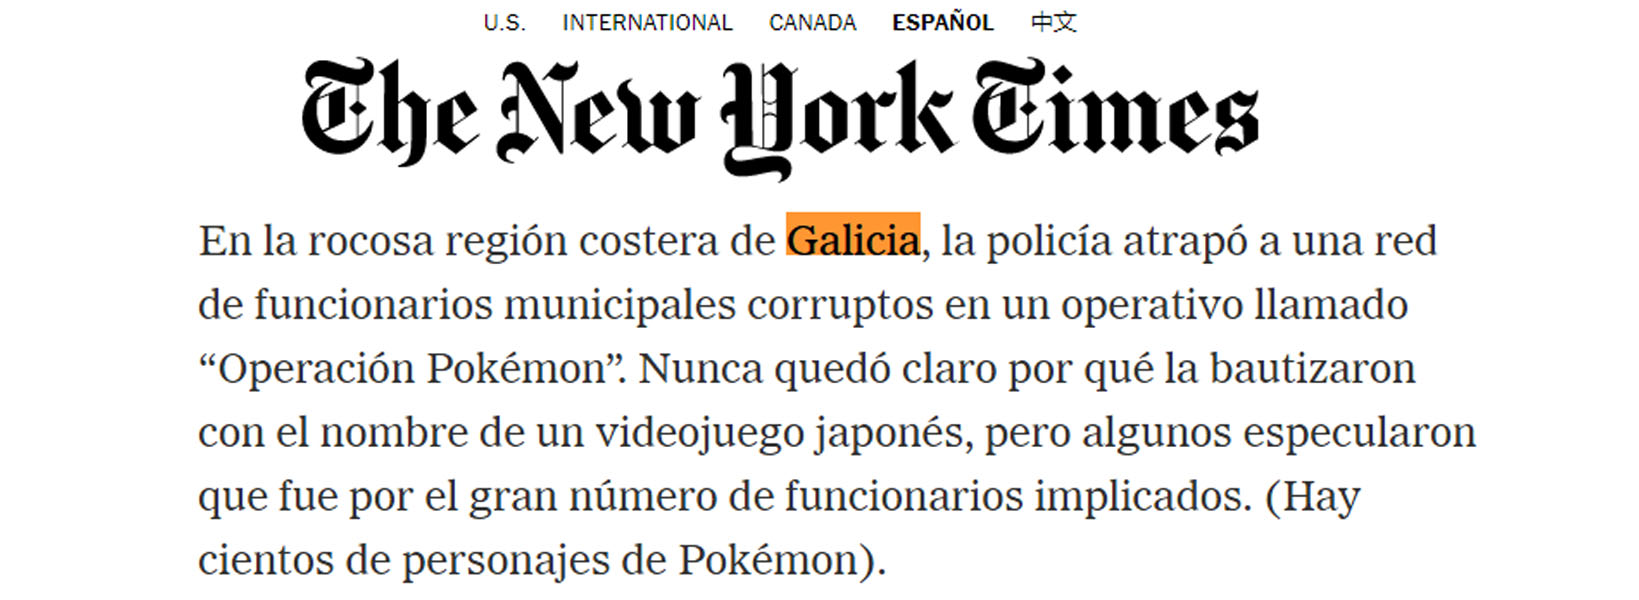 newyorktimes galicia corruptos